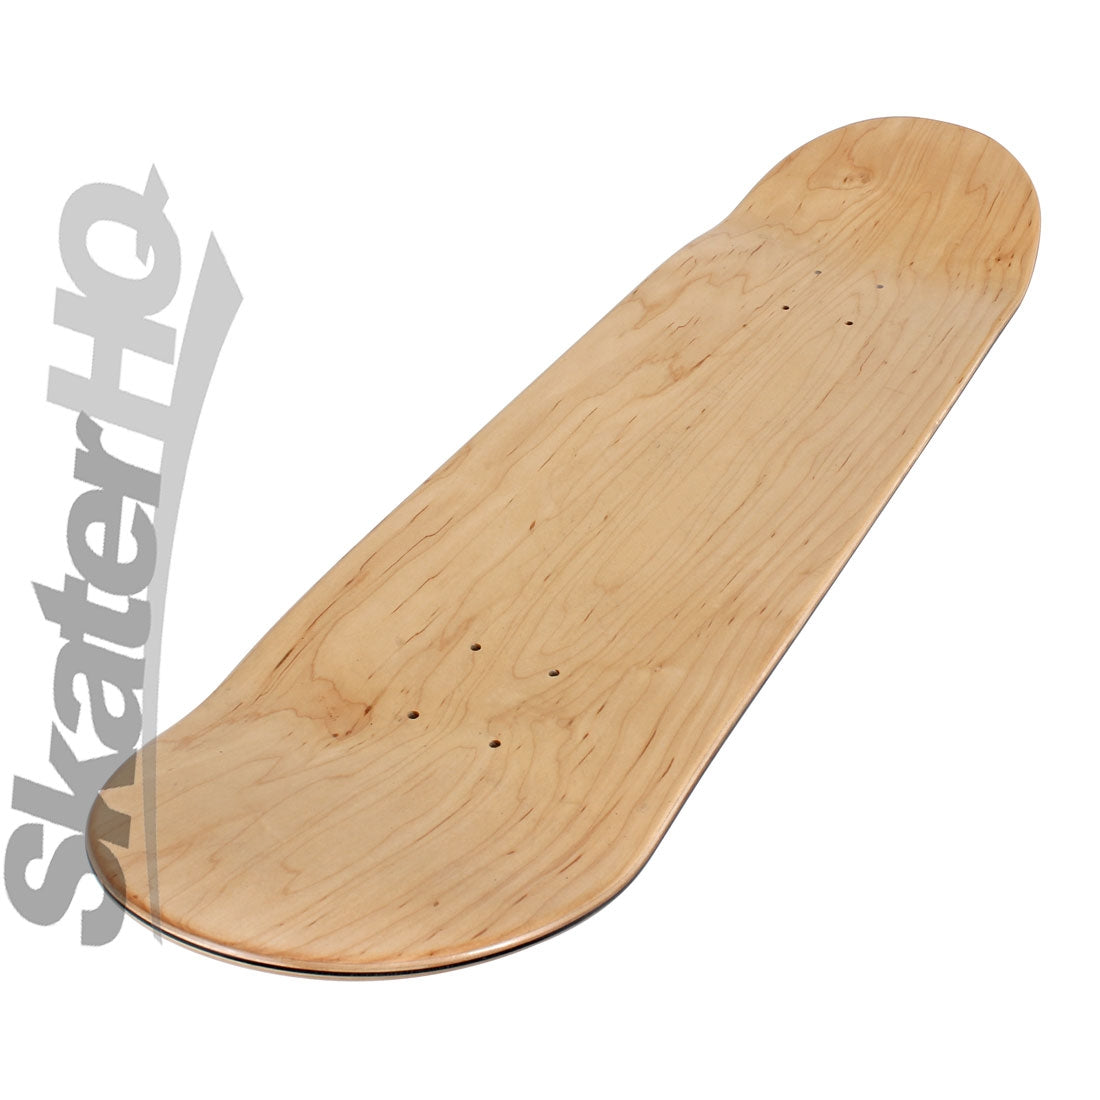 Absolute Blank 8.0 Deck - Natural Skateboard Decks ALL BLANKS